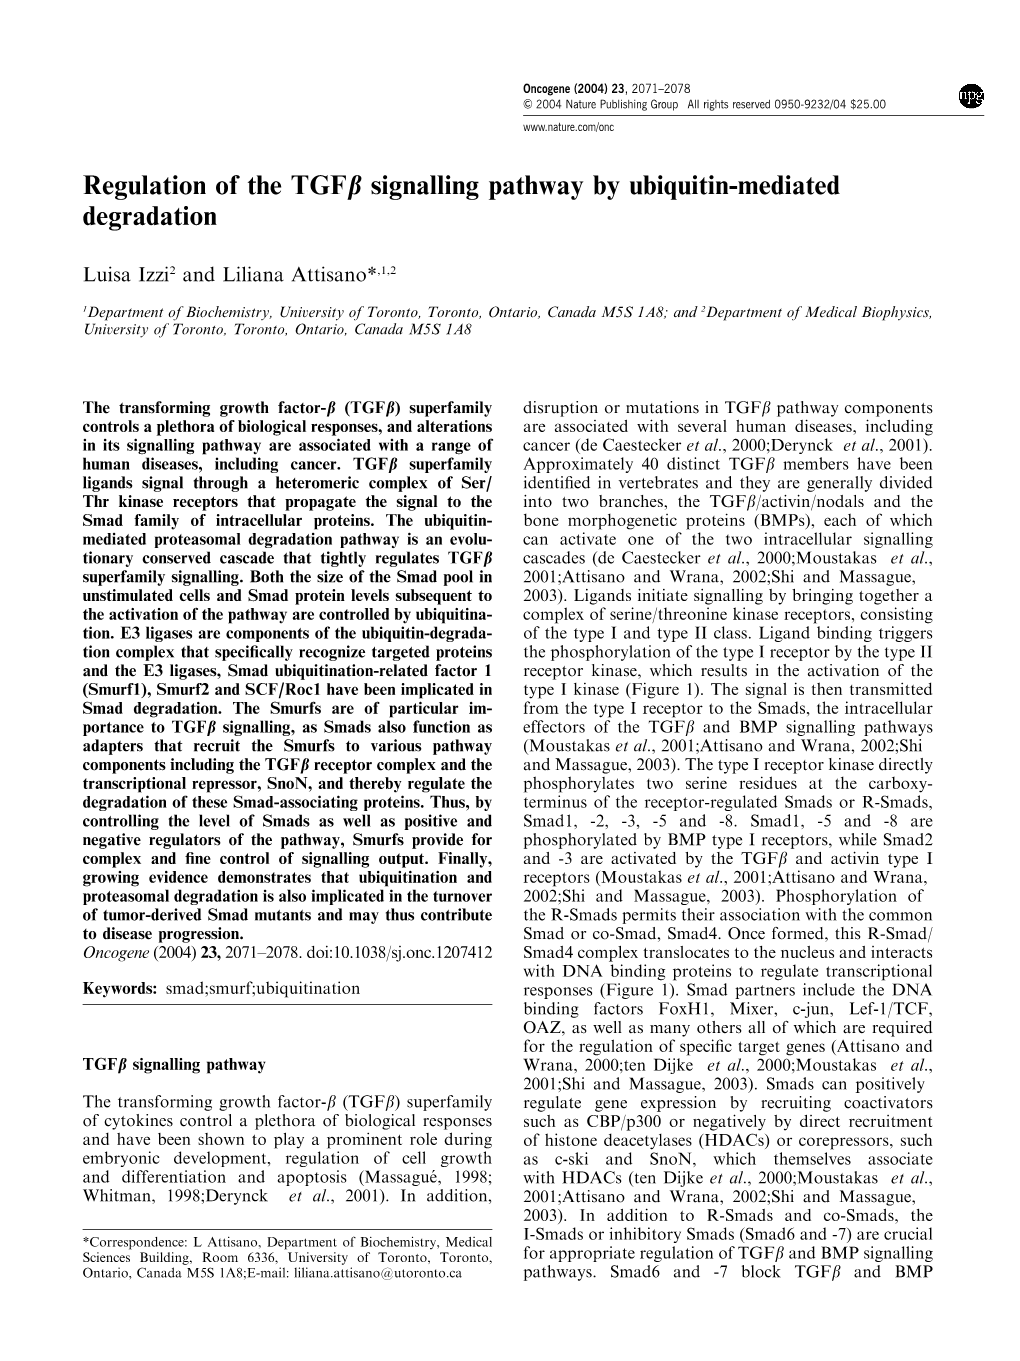 Regulation of the Tgfb Signalling Pathway by Ubiquitin-Mediated Degradation